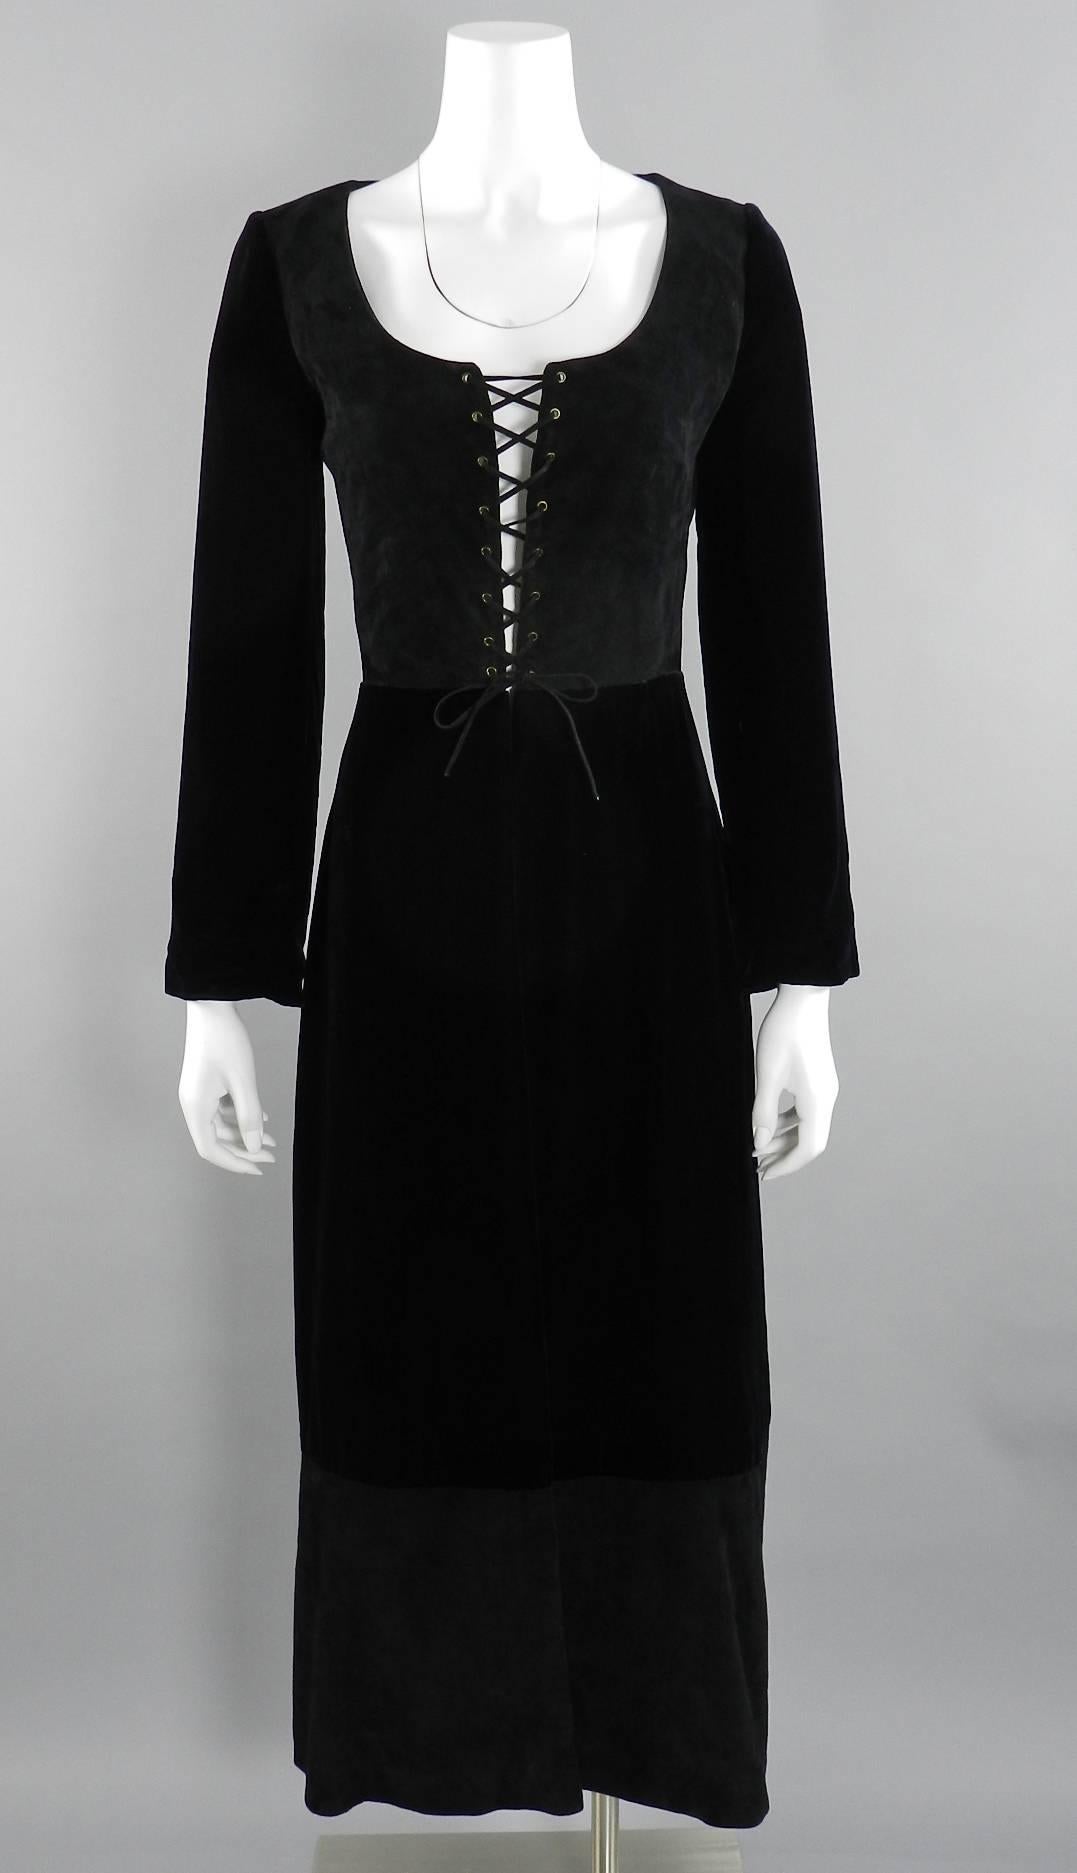 Prada 1990's Black Vevet and Suede Lace Up Bodice Dress 5